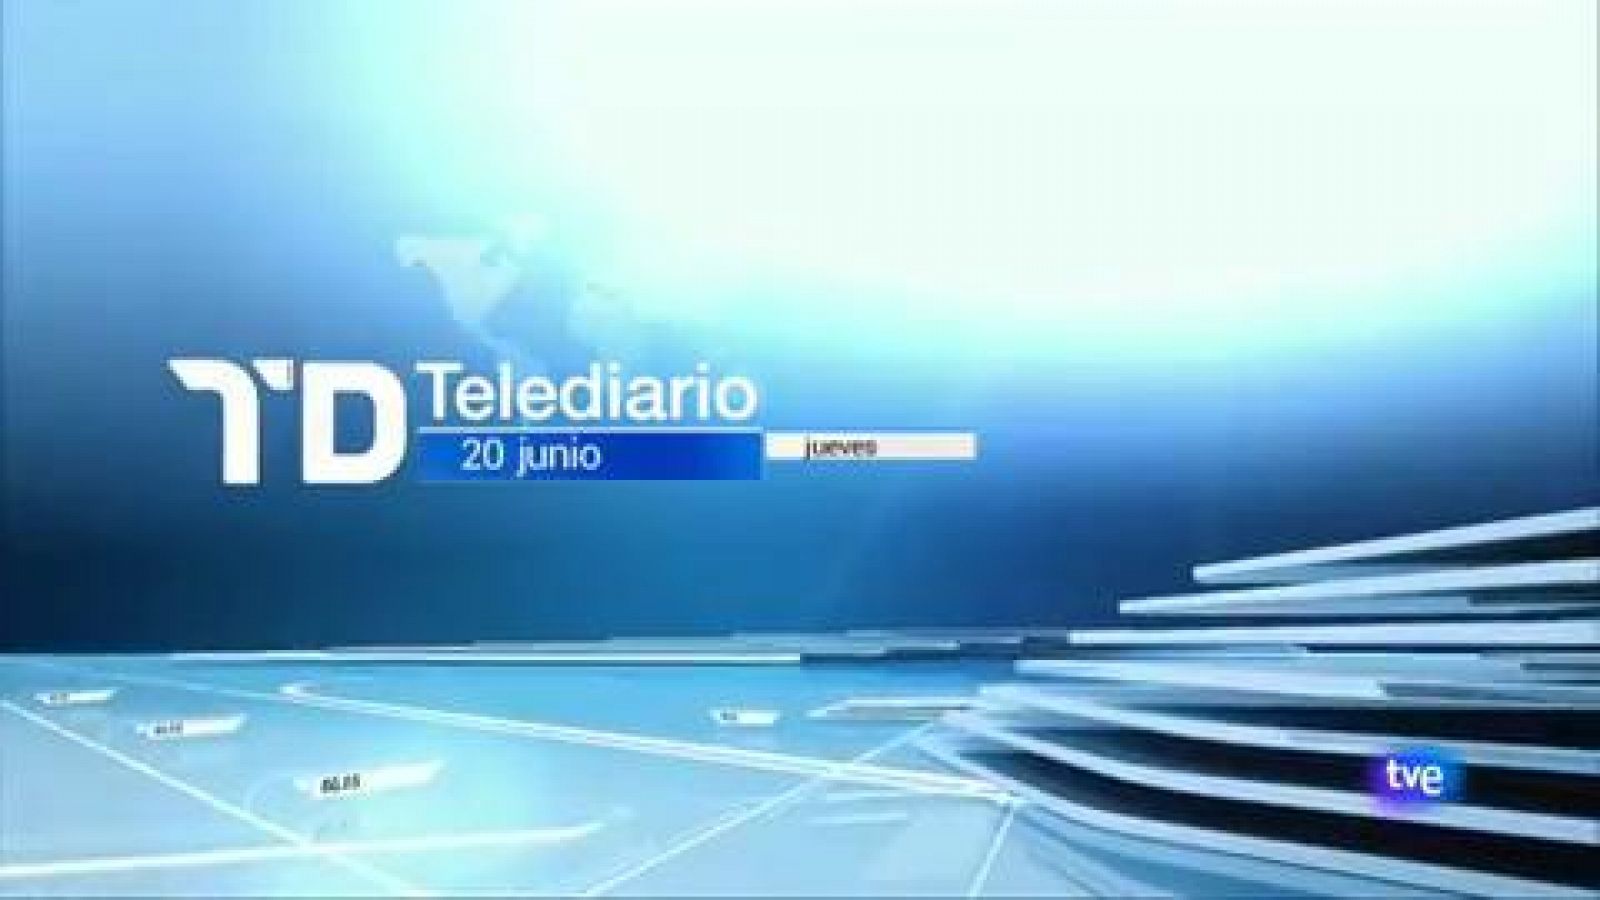 Telediario 1: Telediario 1 en 4' - 20/06/19 | RTVE Play